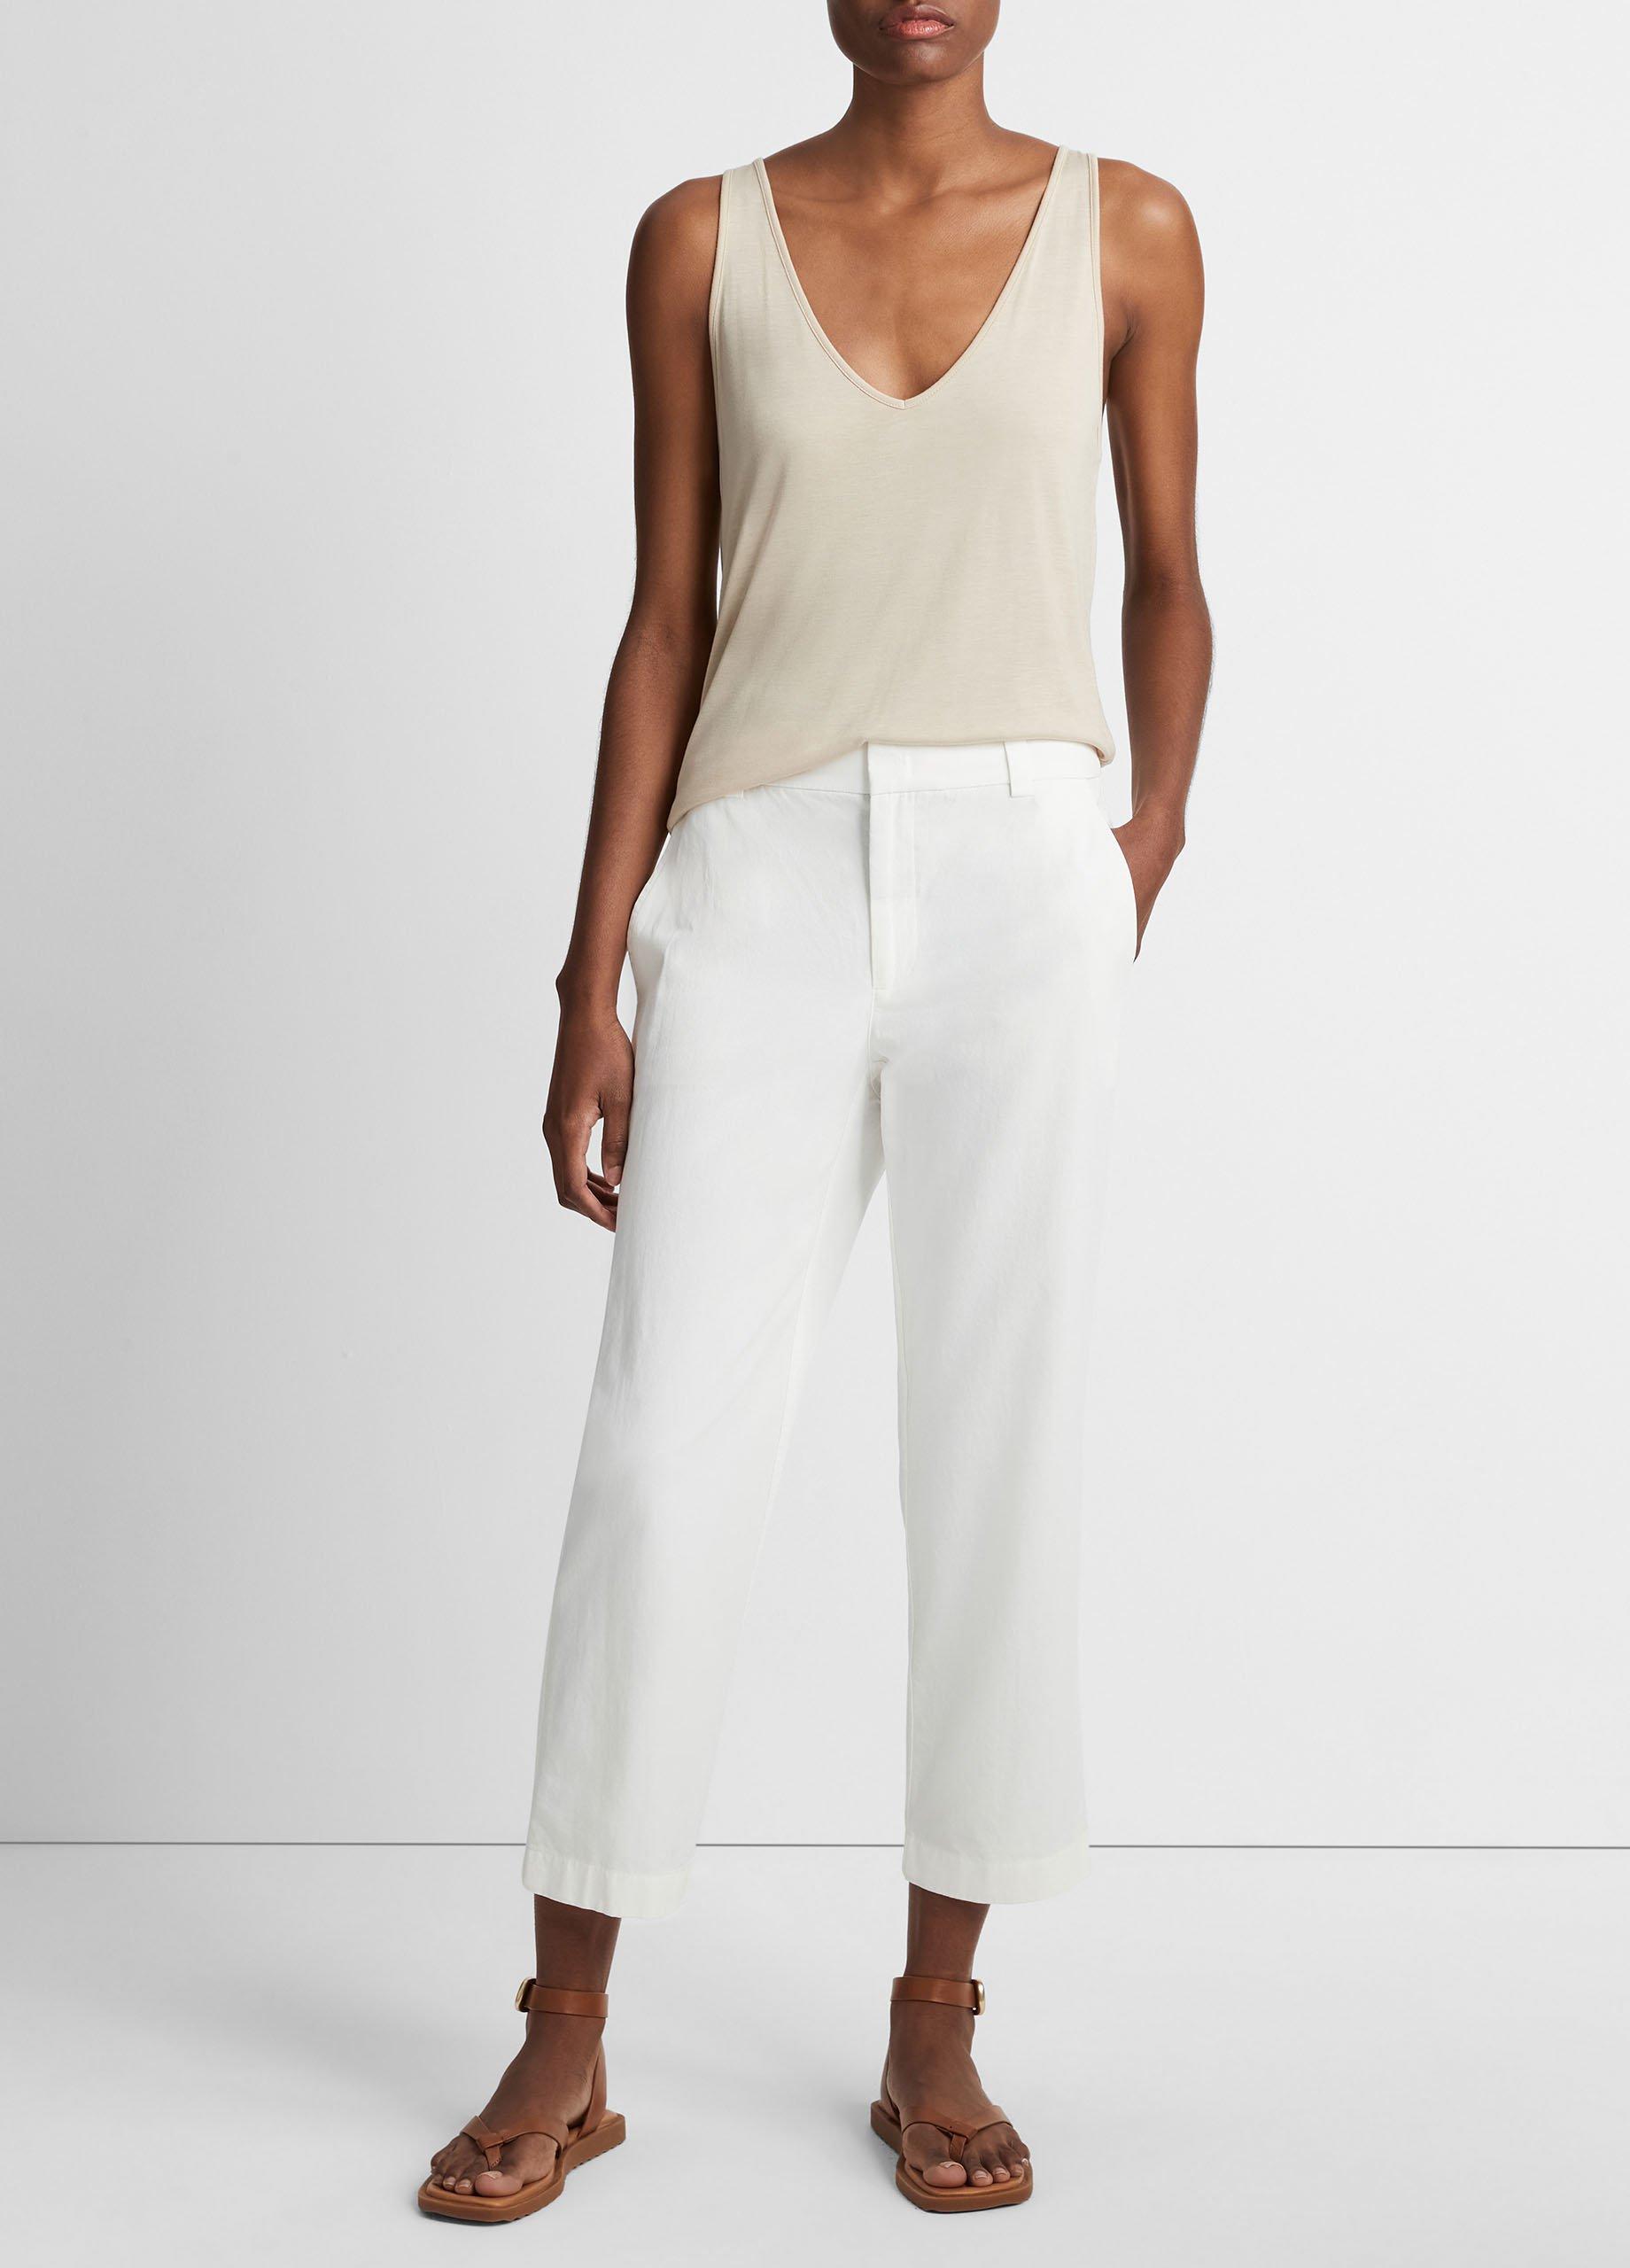 Ladies Womens White Capri Pants Cropped Trousers 100% Cotton Size Large UK  14-16